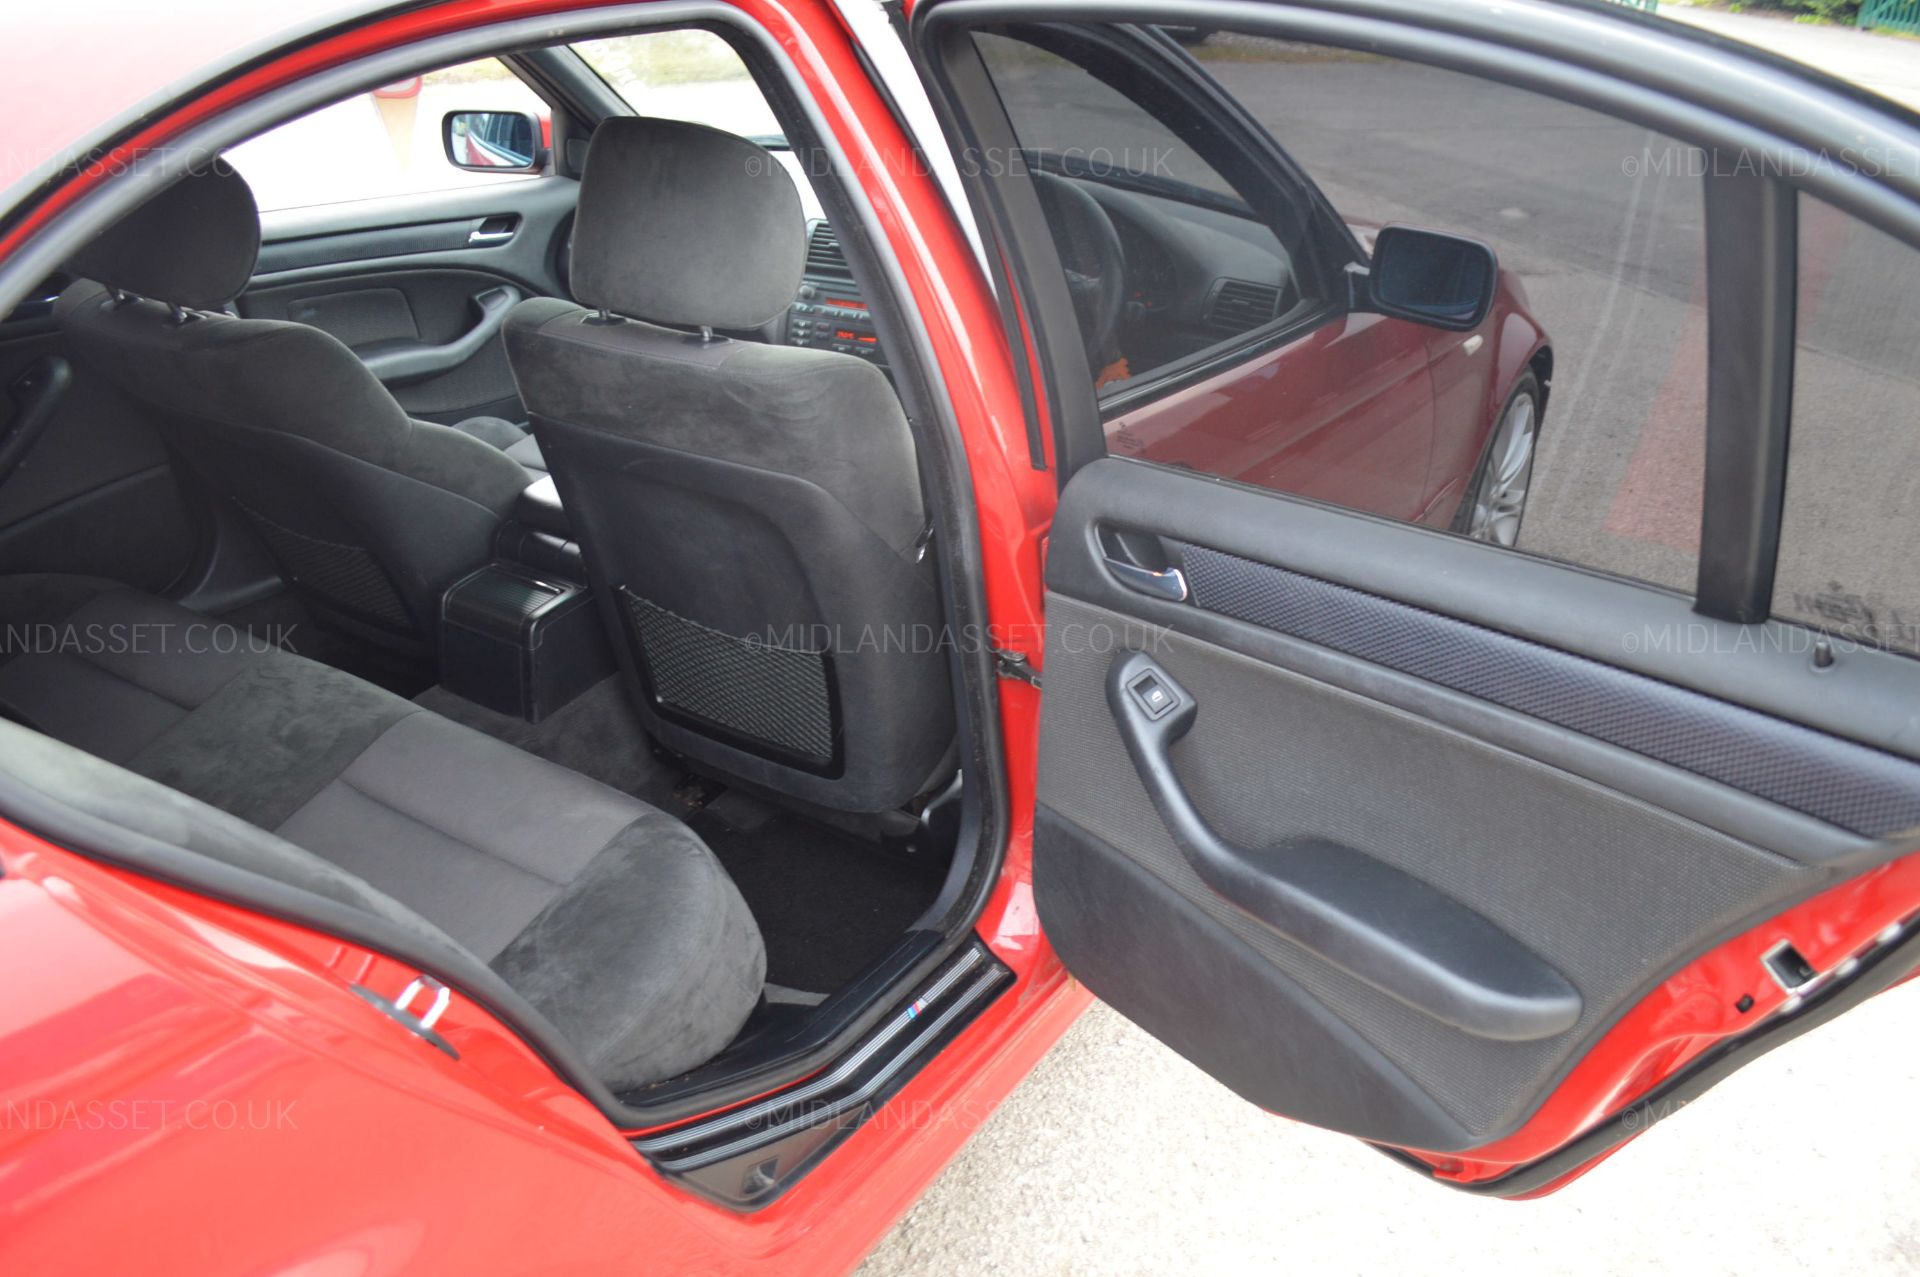 2004/04 REG BMW 320D SPORT 2.0 MANUAL METALLIC RED *NO VAT* - Image 11 of 26